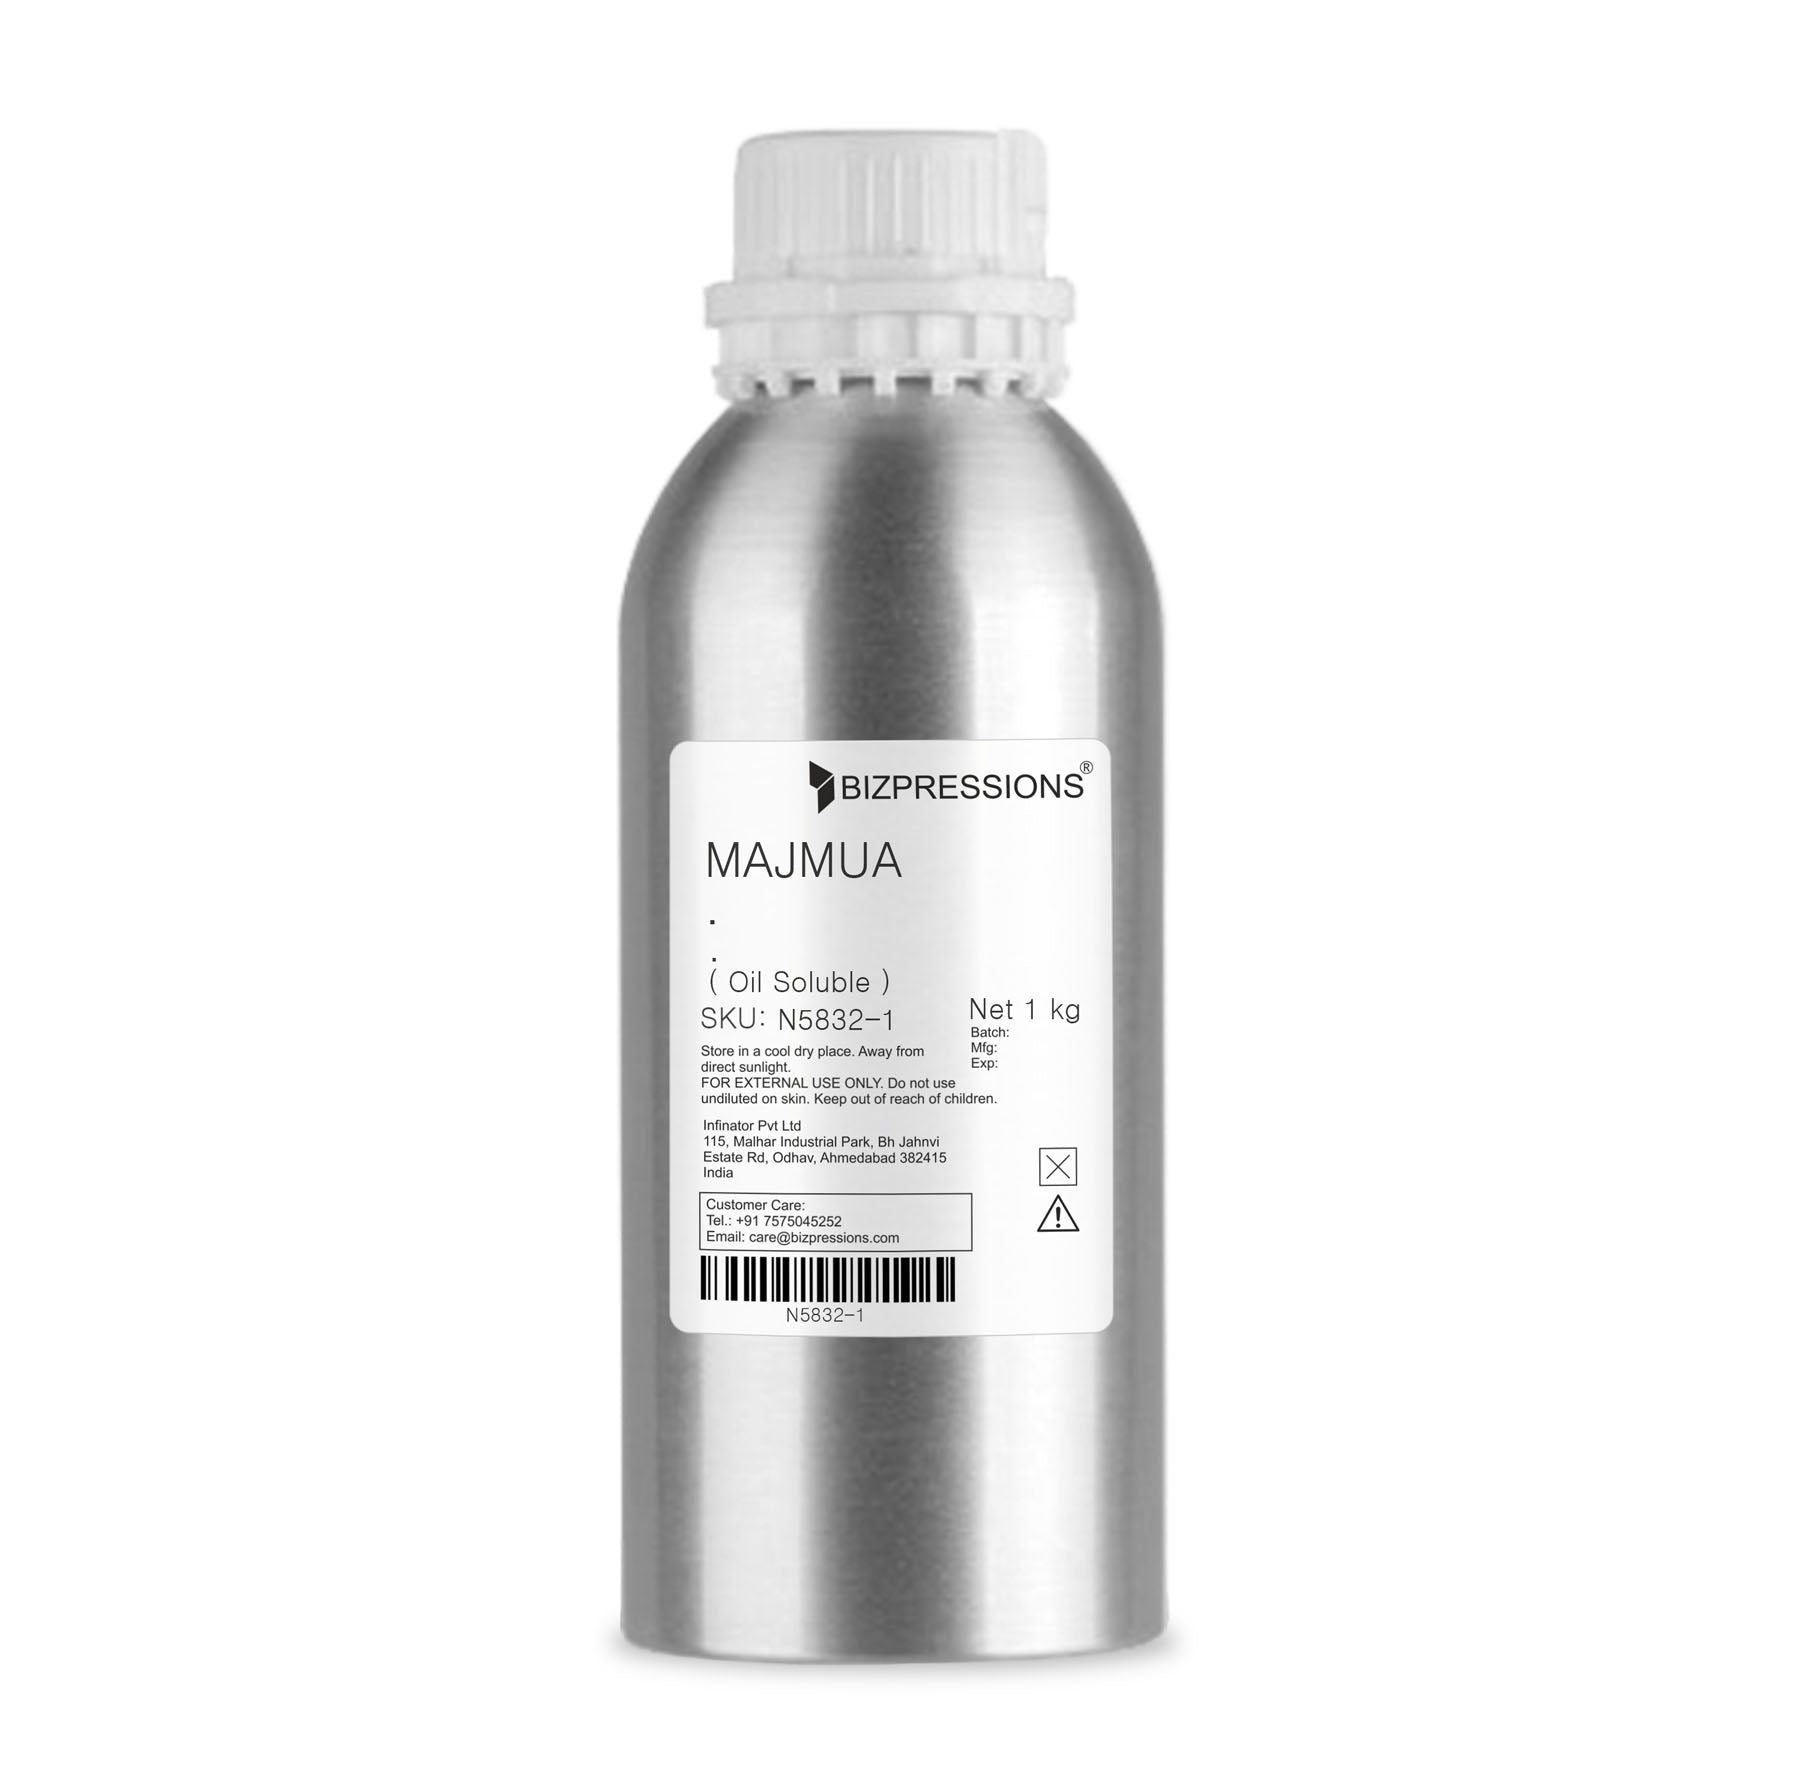 MAJMUA - Fragrance ( Oil Soluble ) - 1 kg